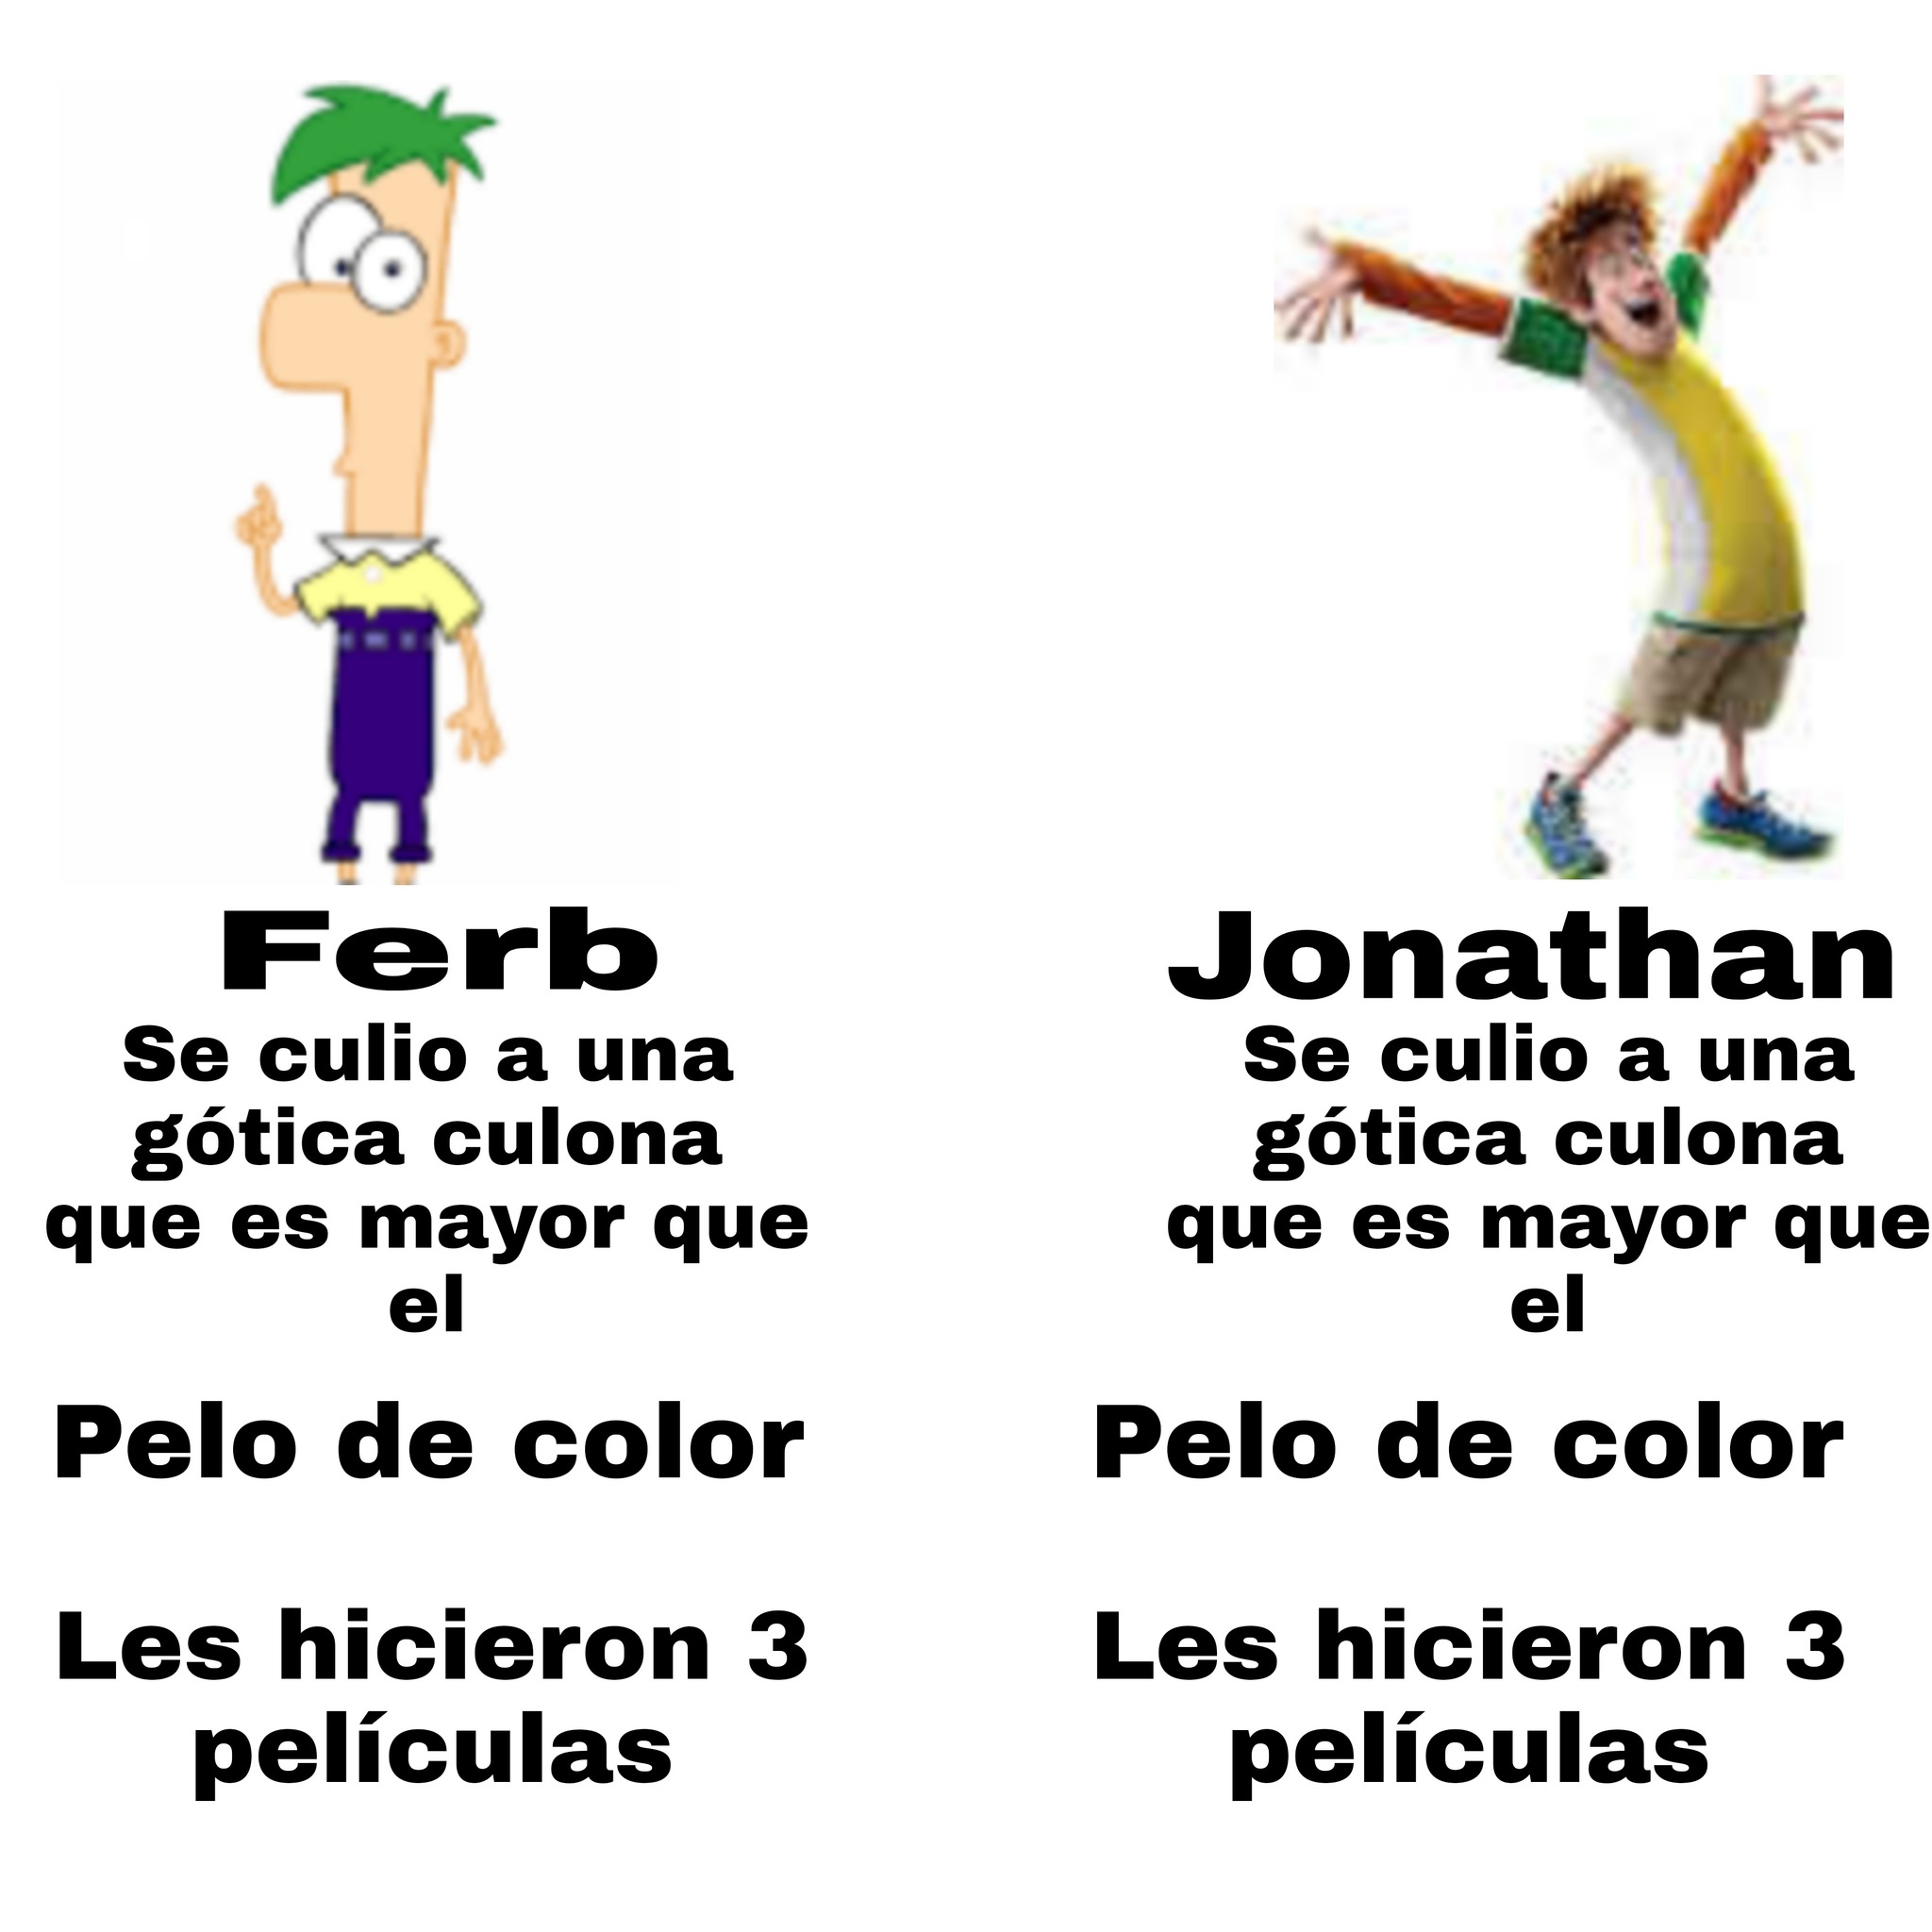 Jonathan vs ferb - meme